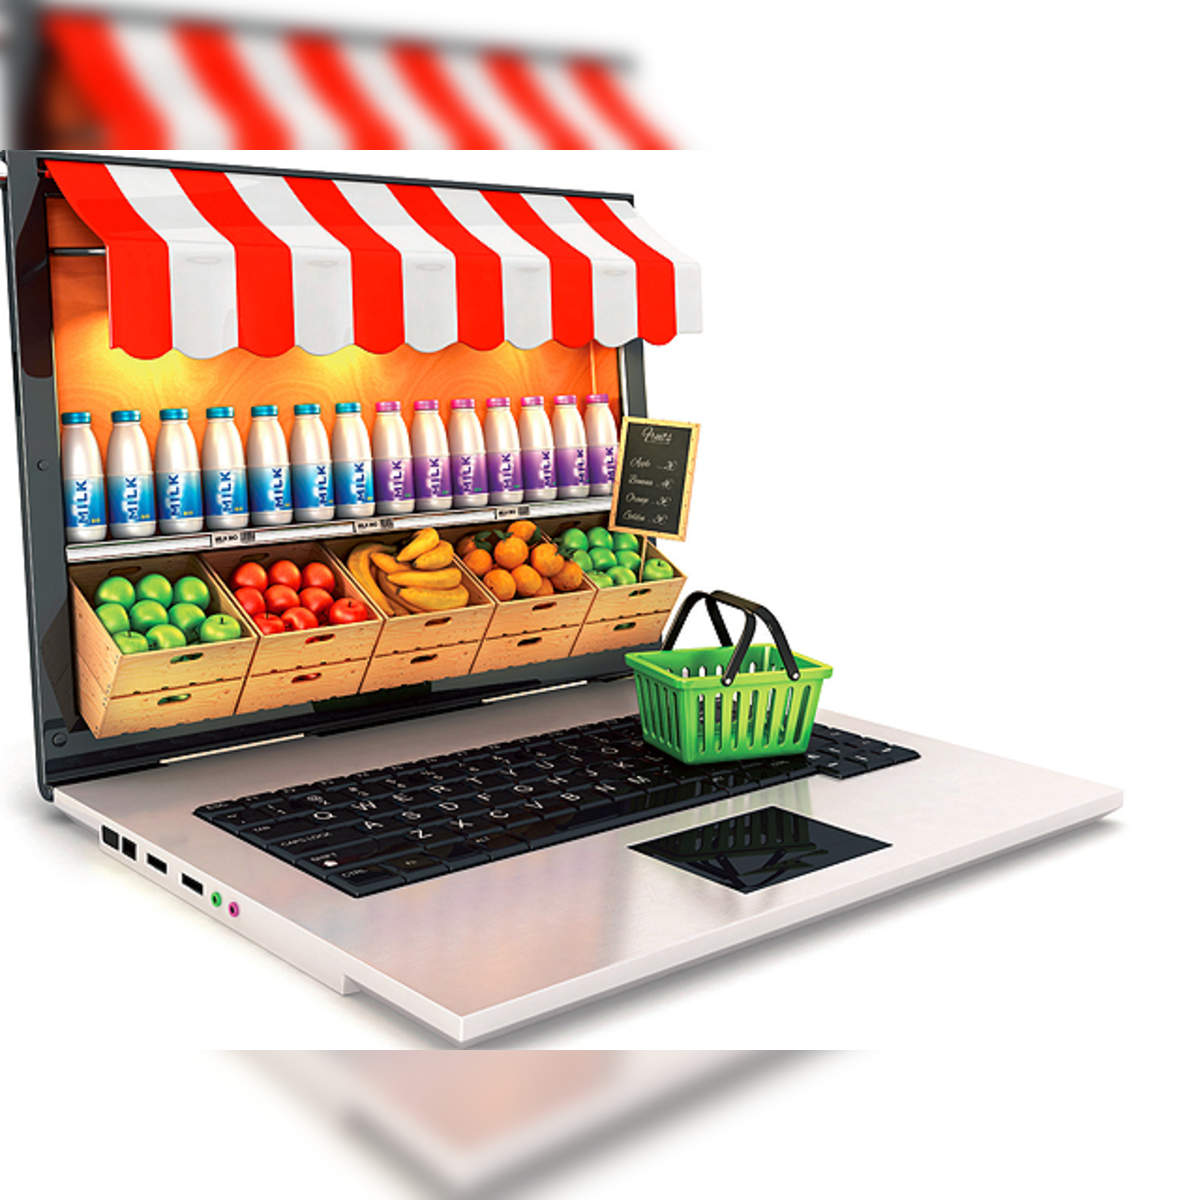 Buy Fresh Apple Shopping online at Best Price in Chennai